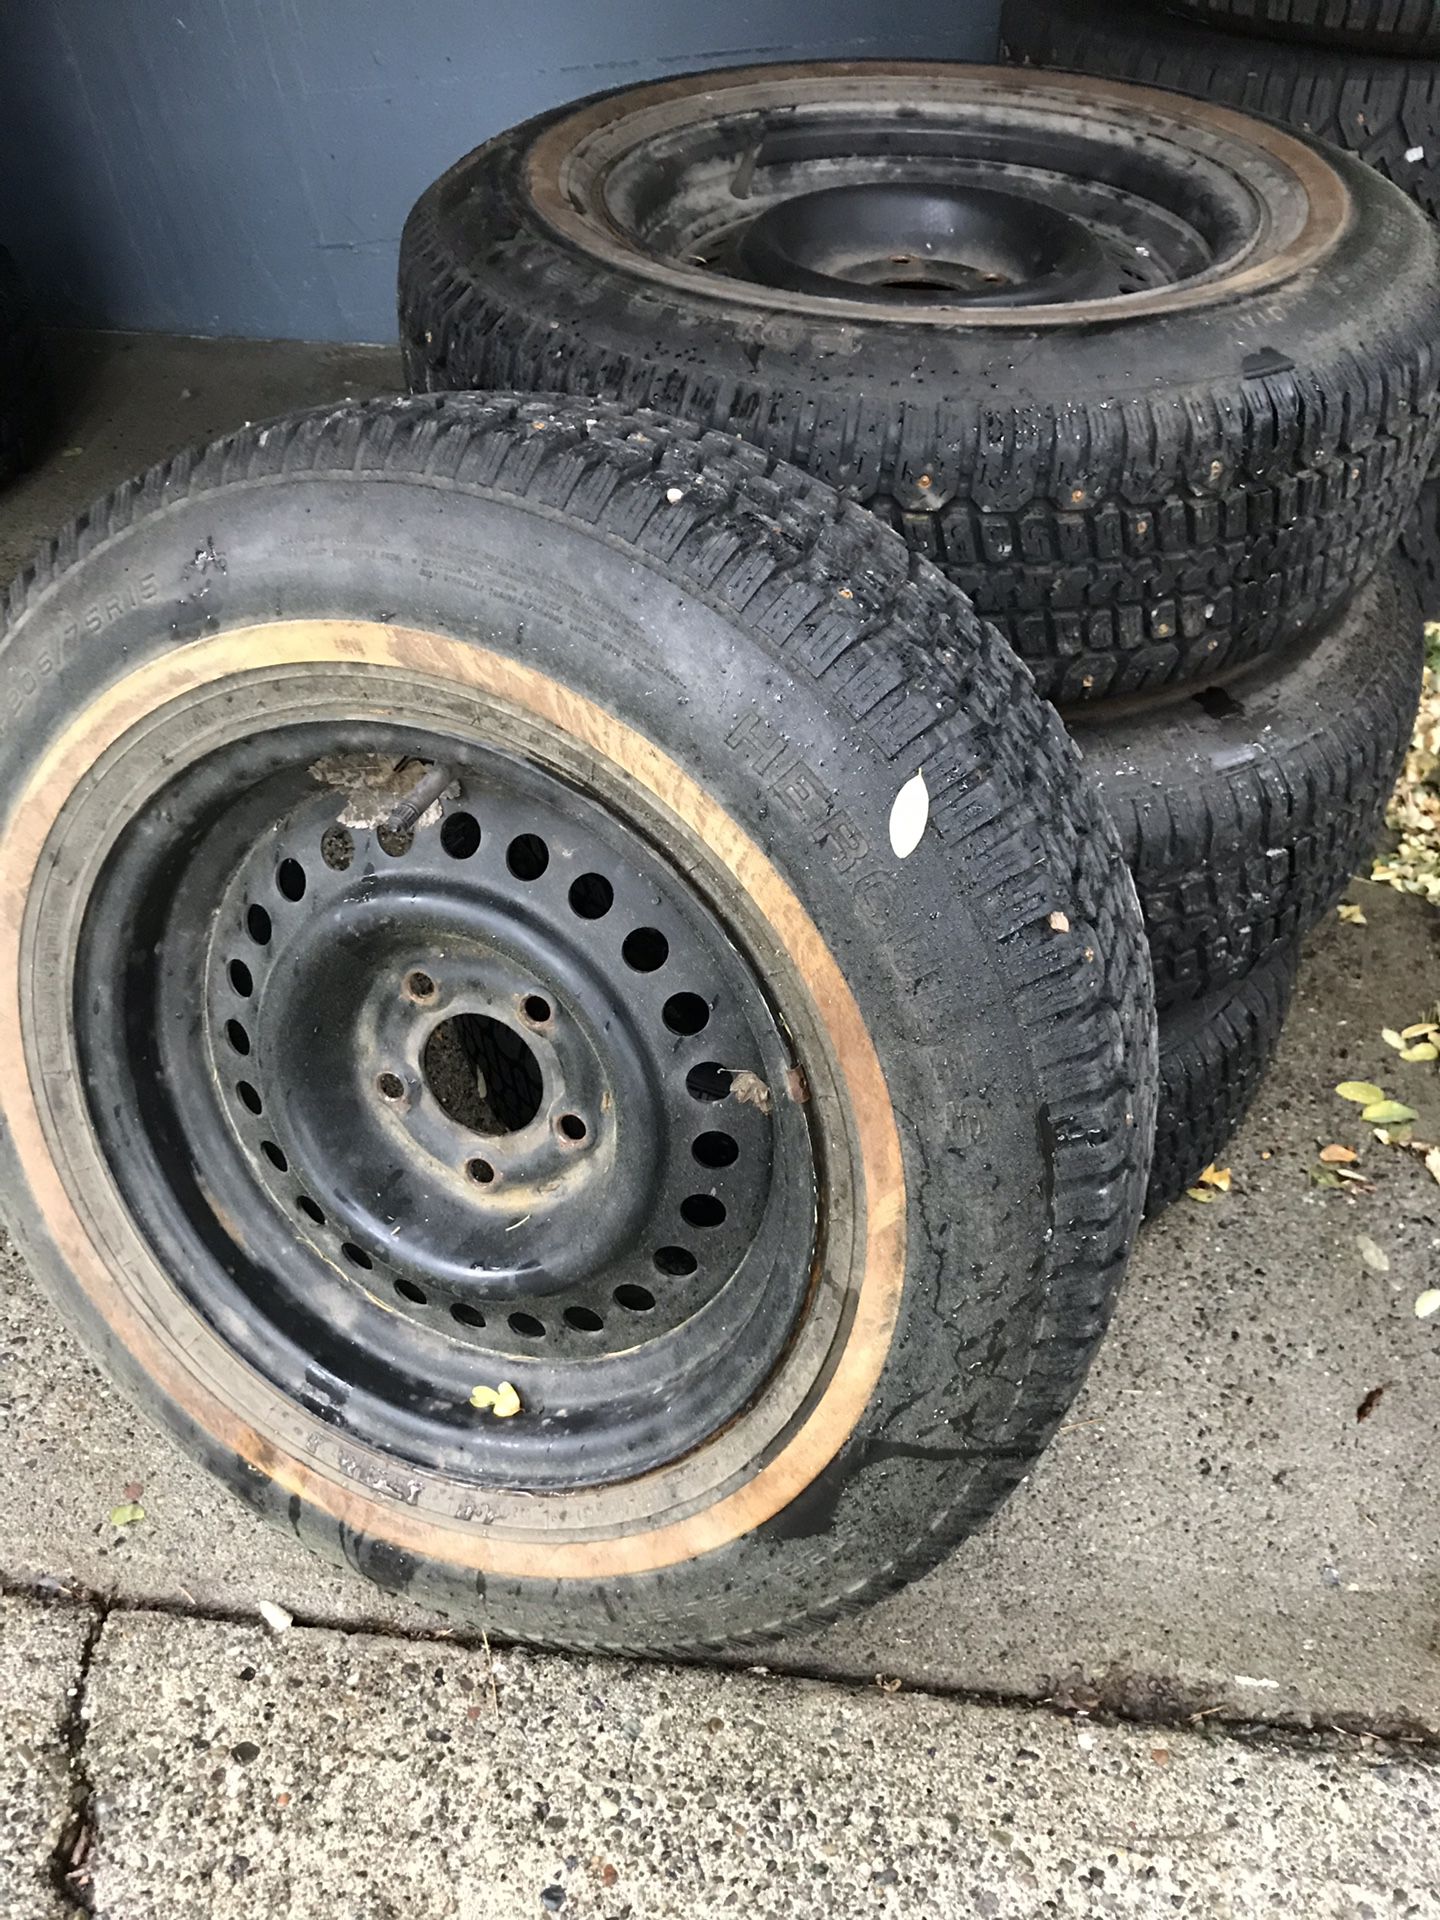 15” Studded snow tires